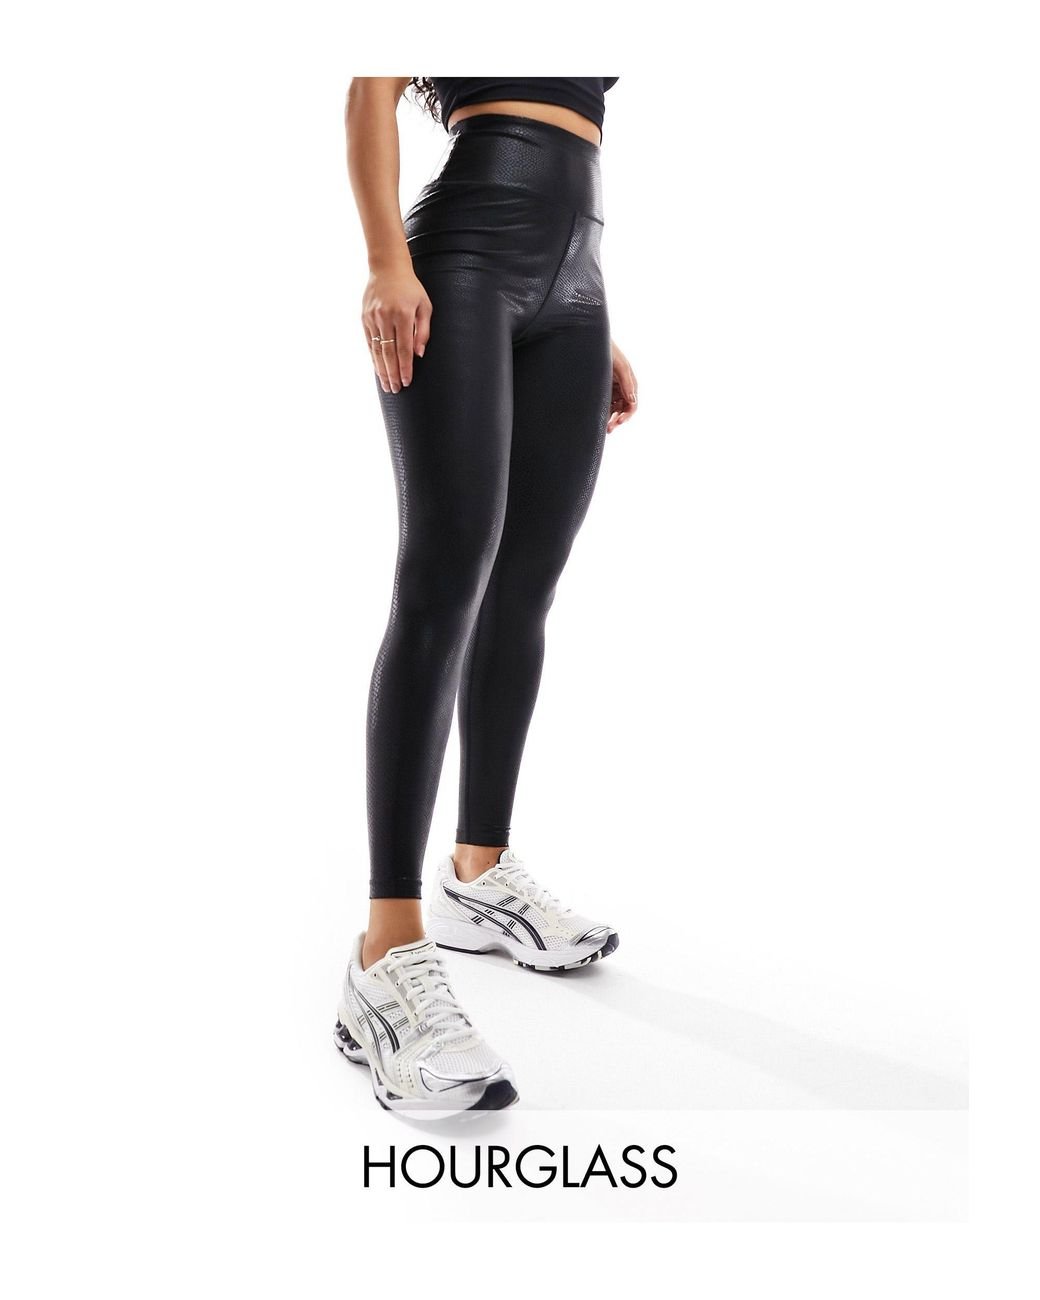 ASOS 4505 Hourglass 7/8 Gym leggings in Black